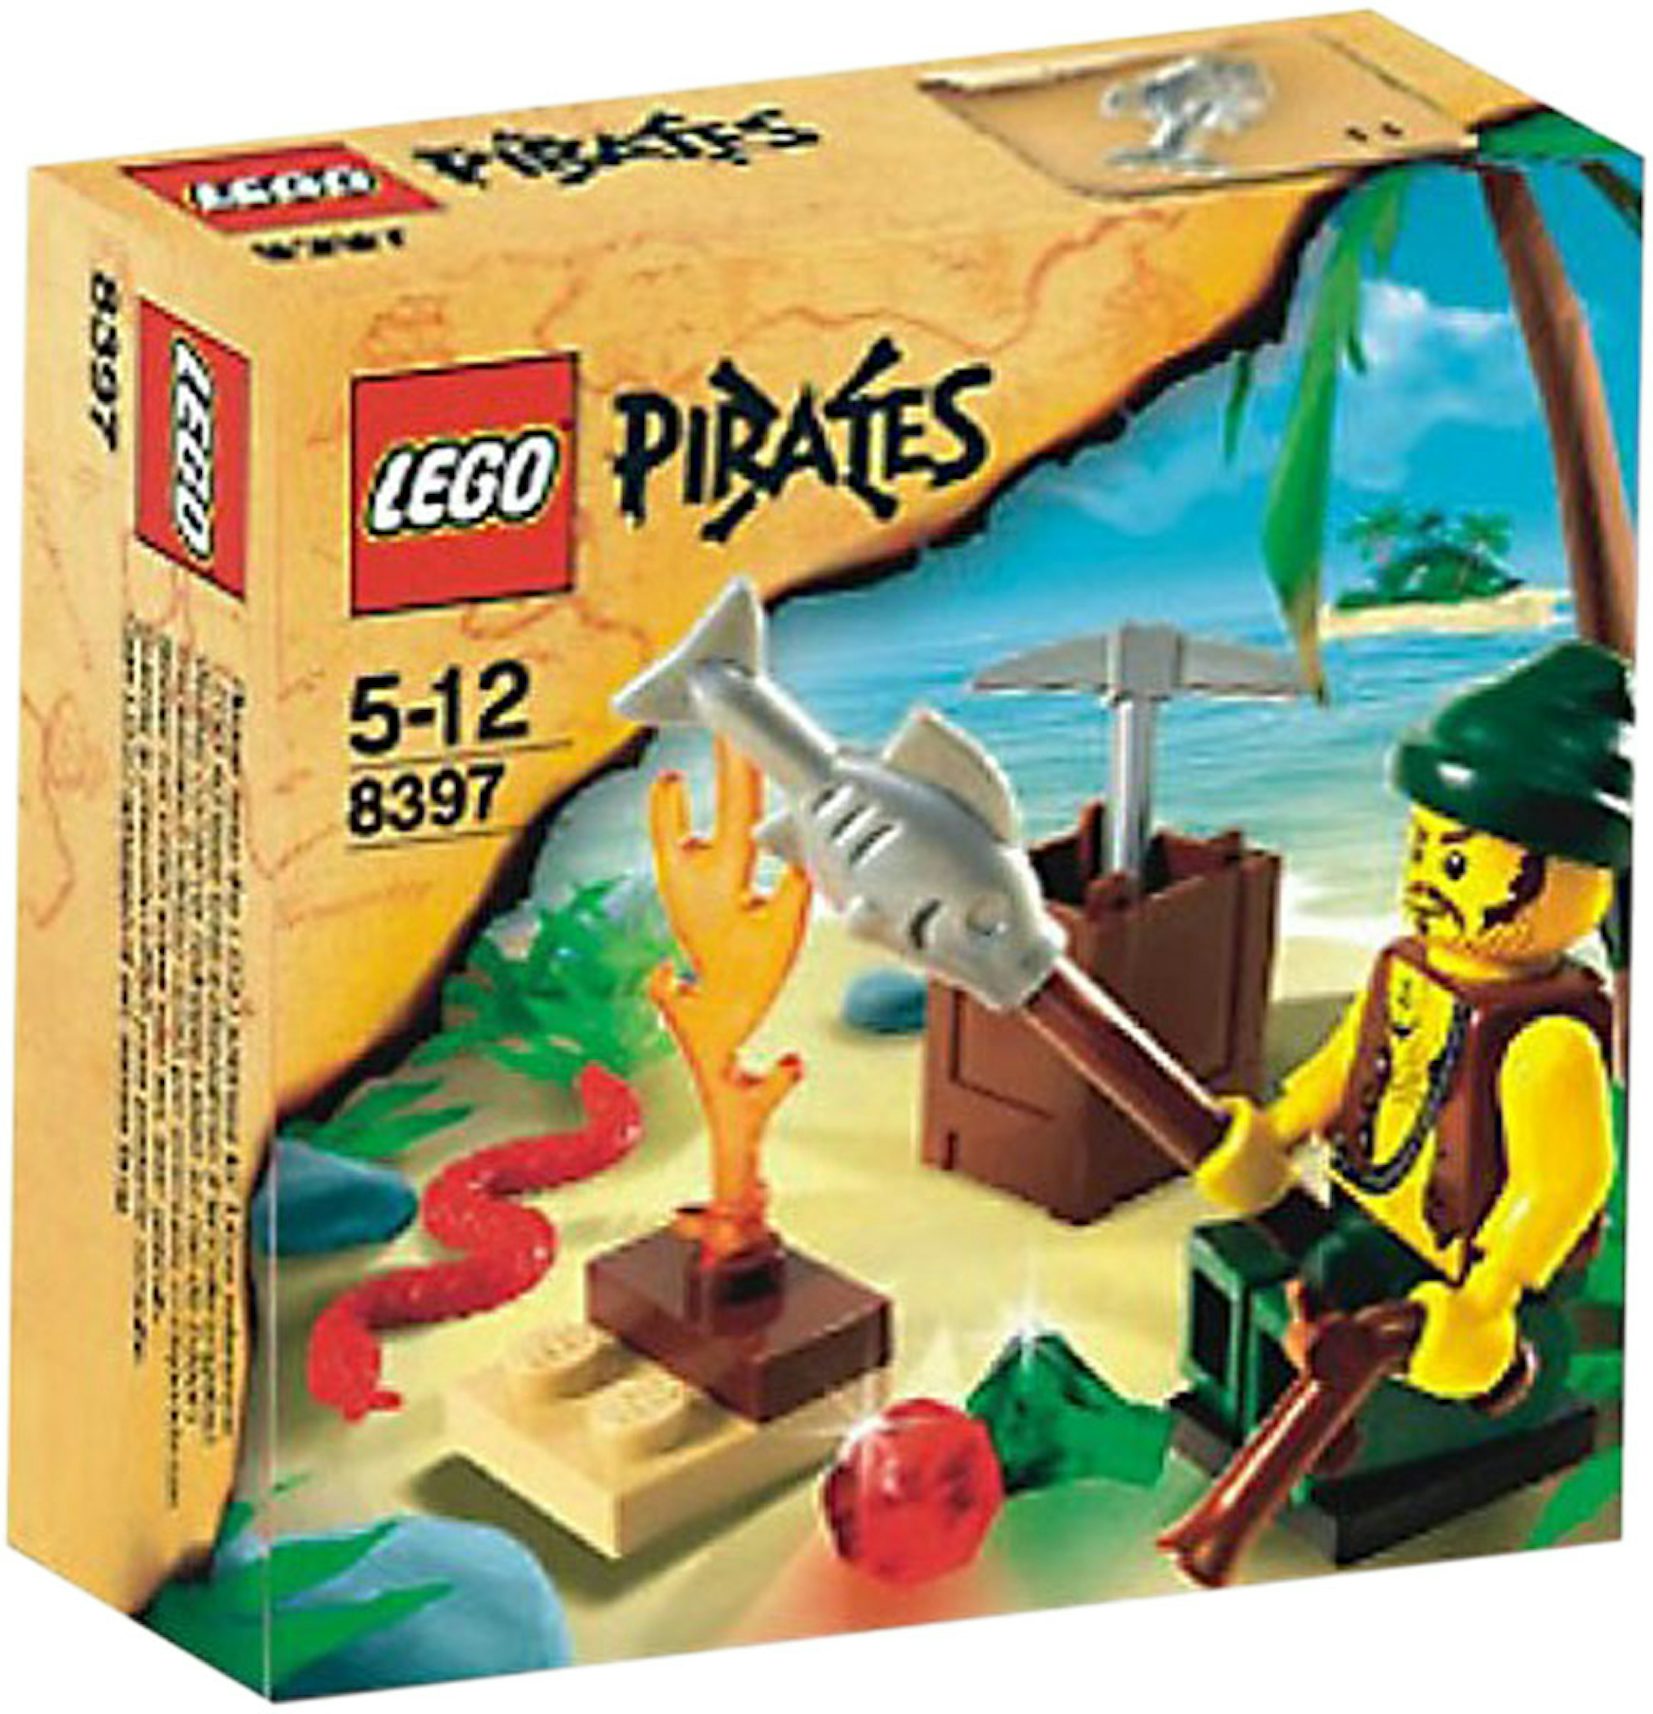 LEGO Pirates Survival Set 8397 - US